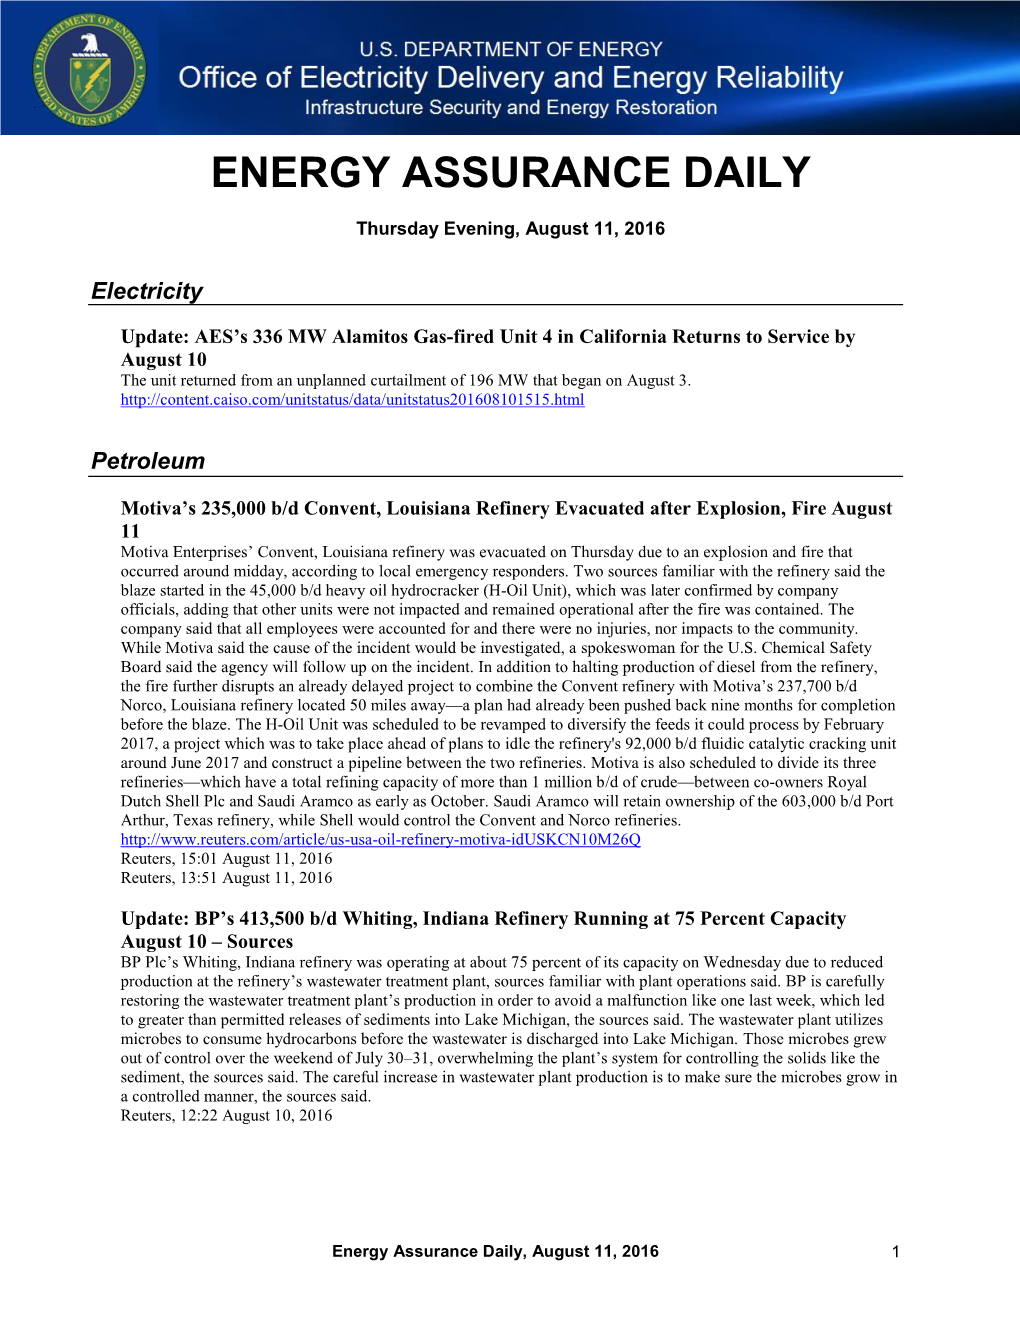 Energy Assurance Daily